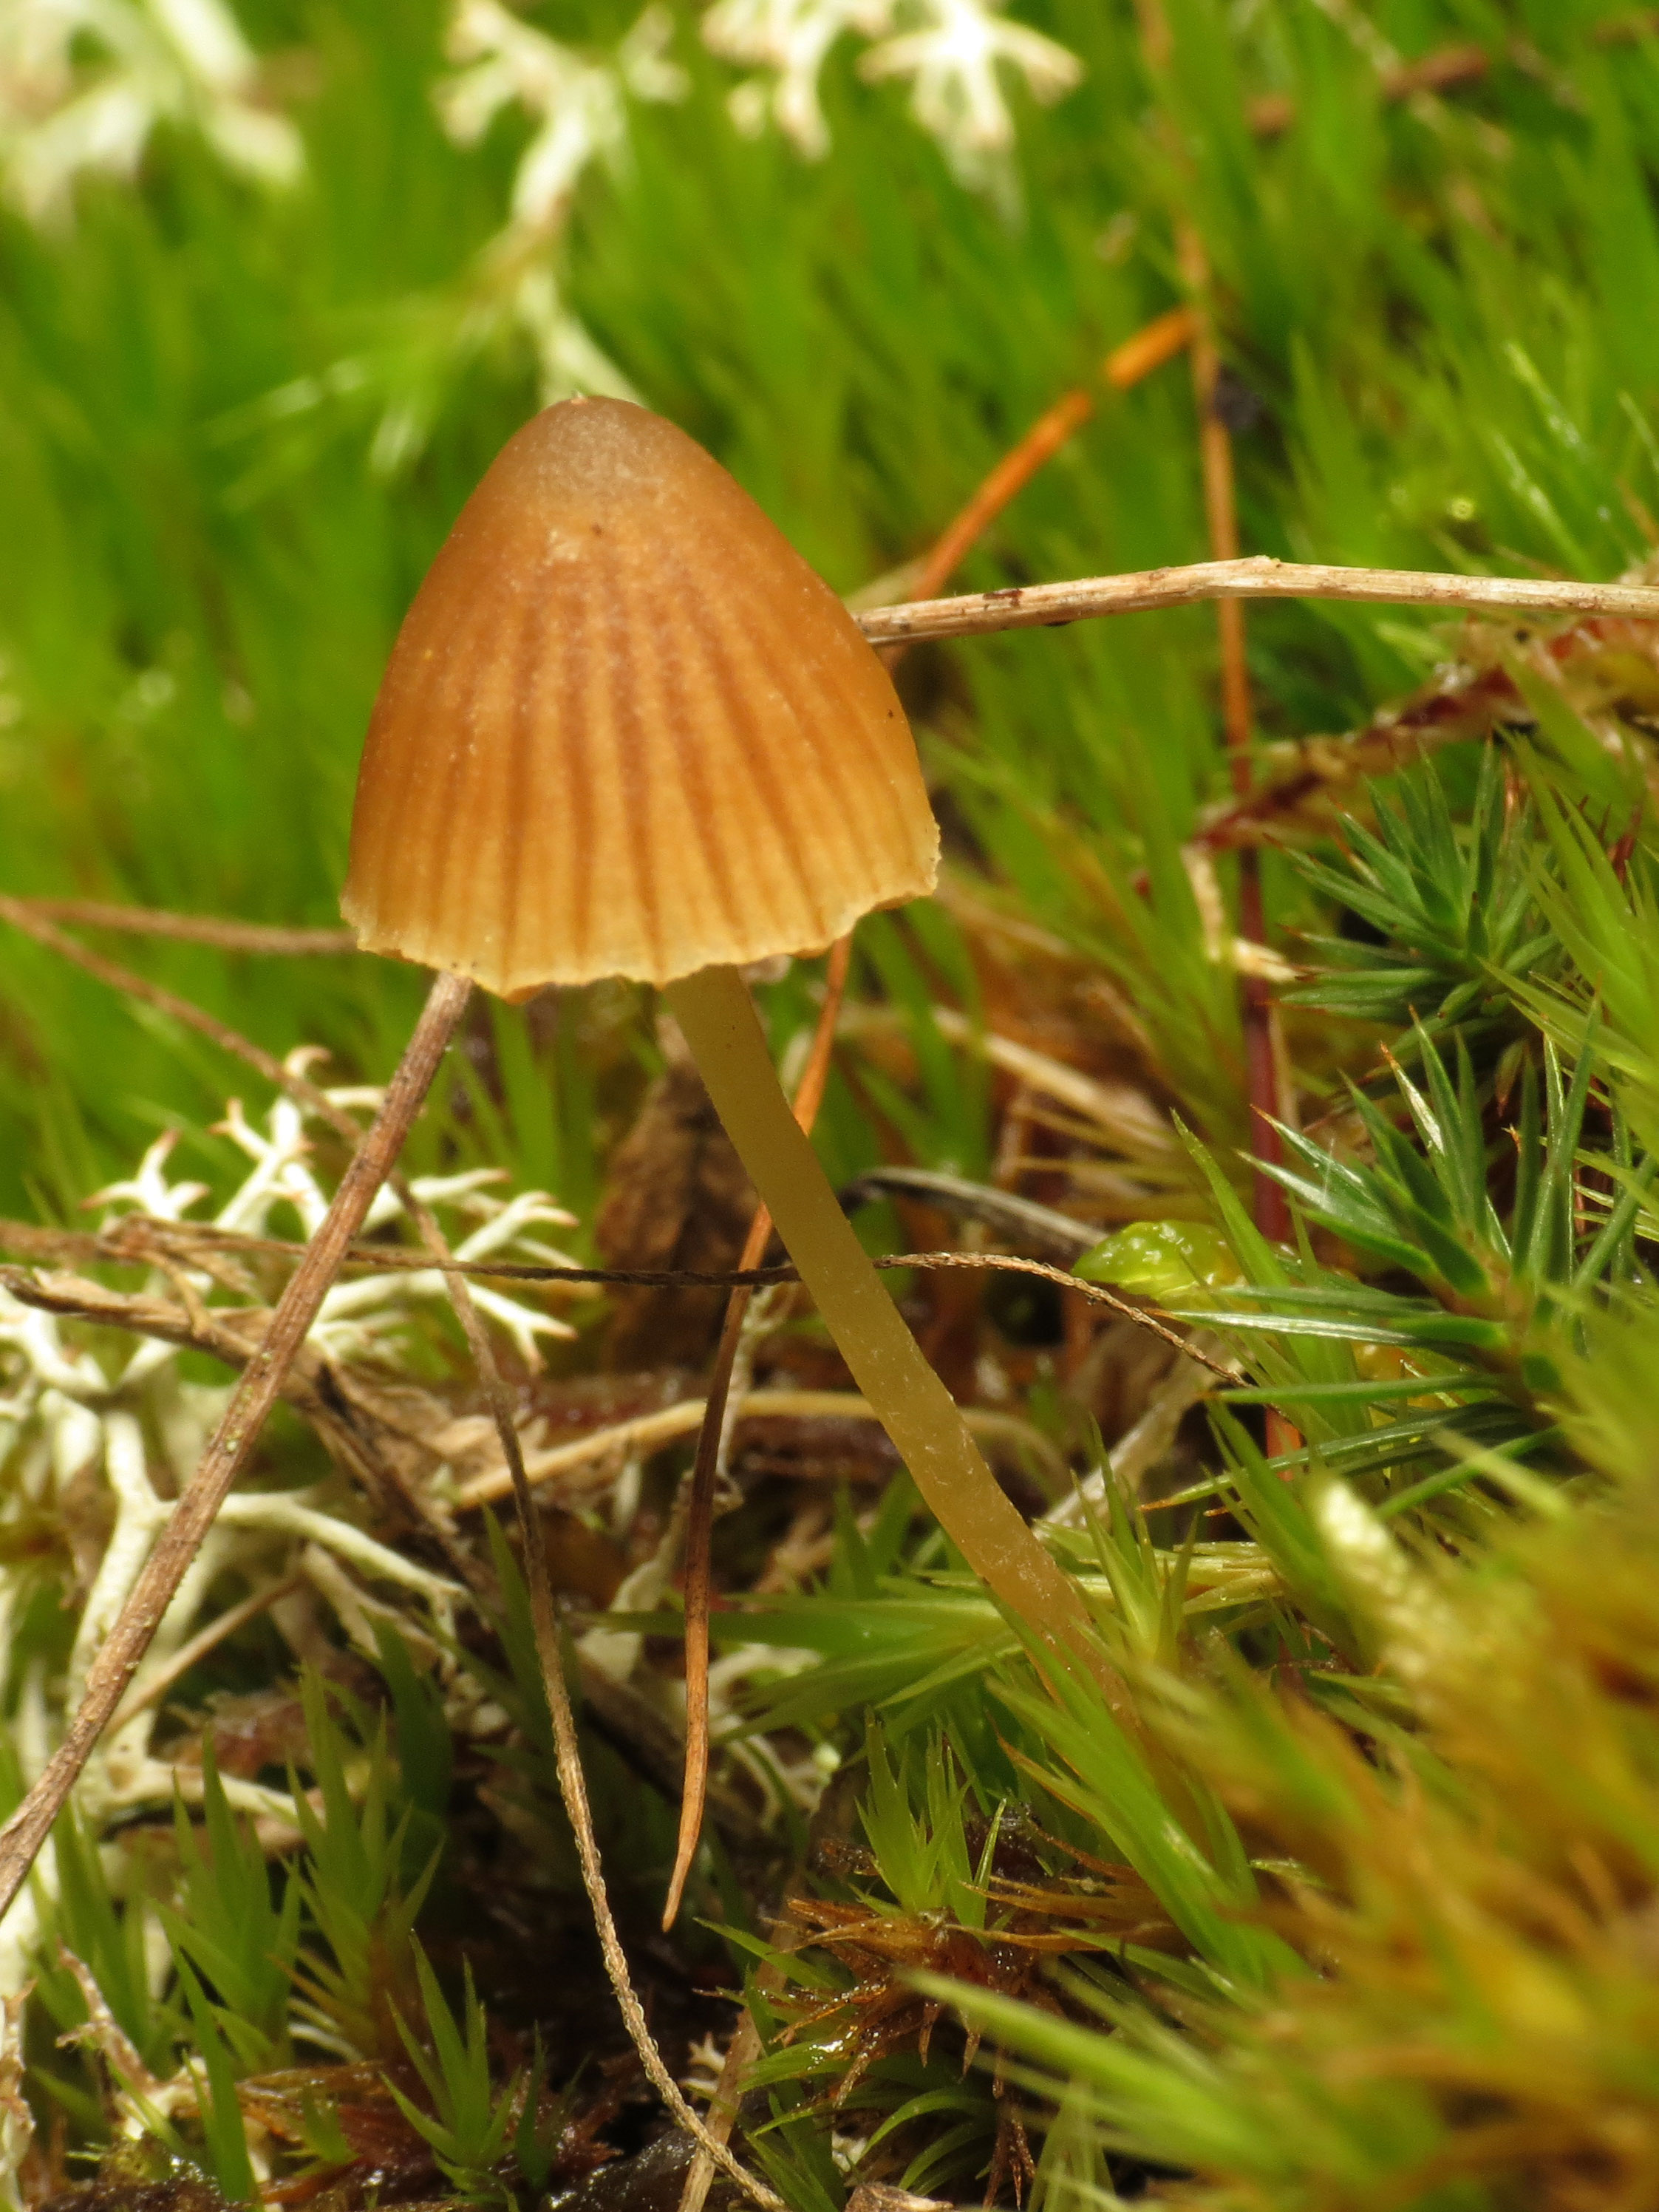 File:Little Brown Mushroom (15744730366).jpg - Wikimedia Commons